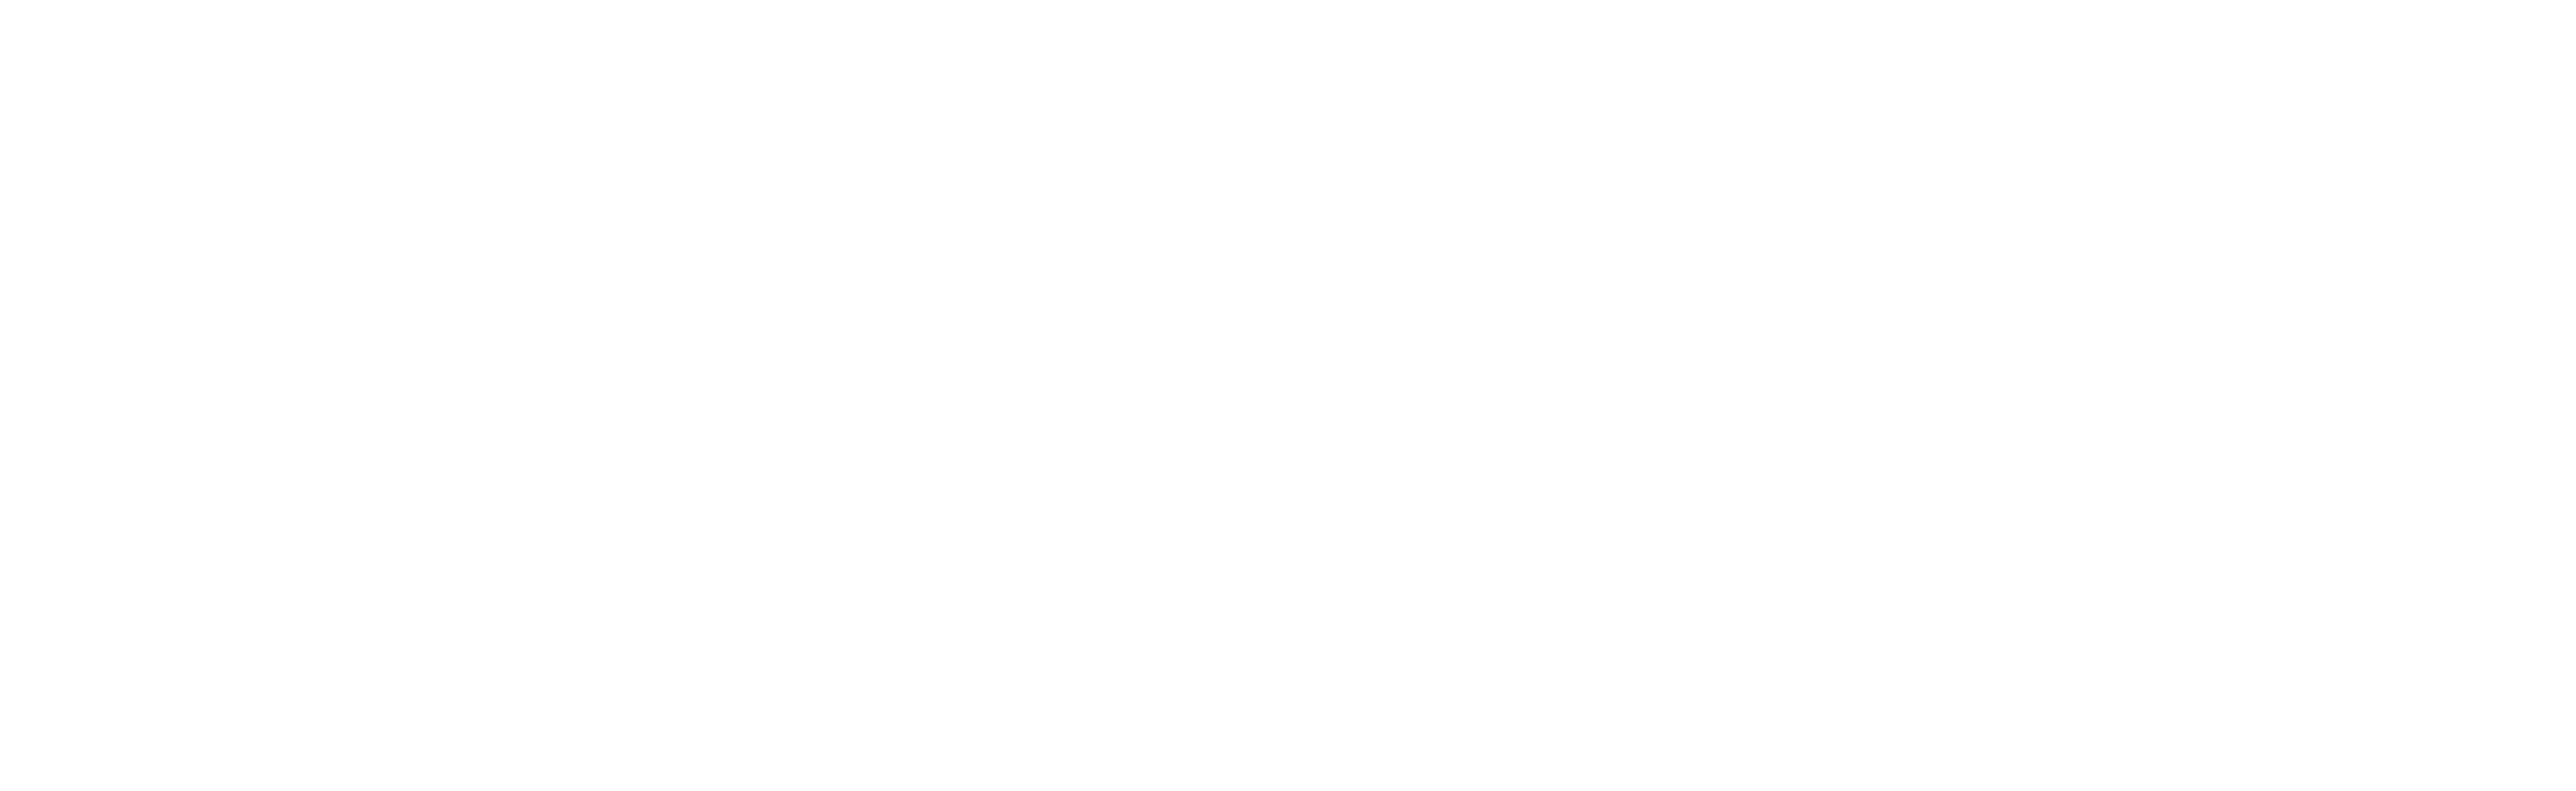 Virginia Appleton Photography - Nba Finals Logo White (8000x2165), Png Download